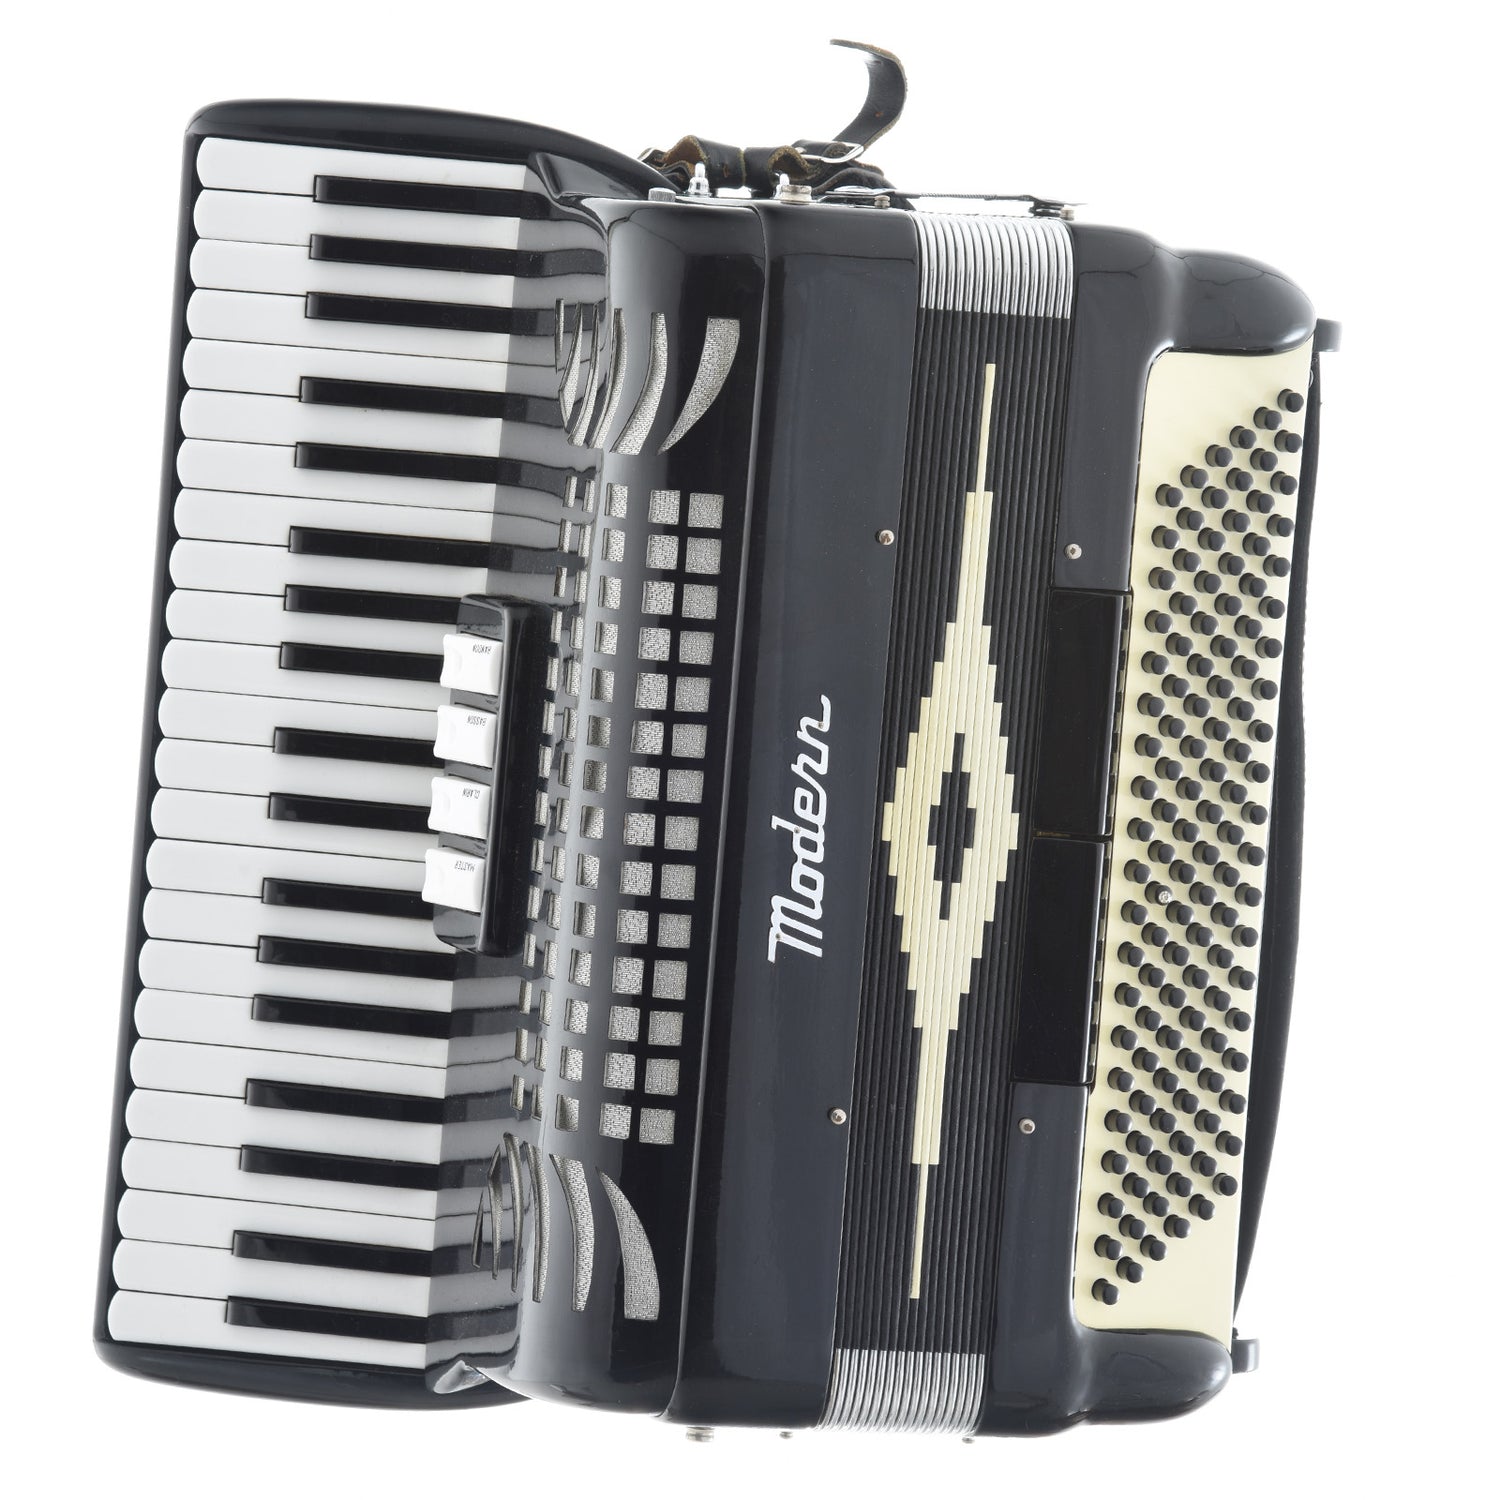 modern piano accordion method